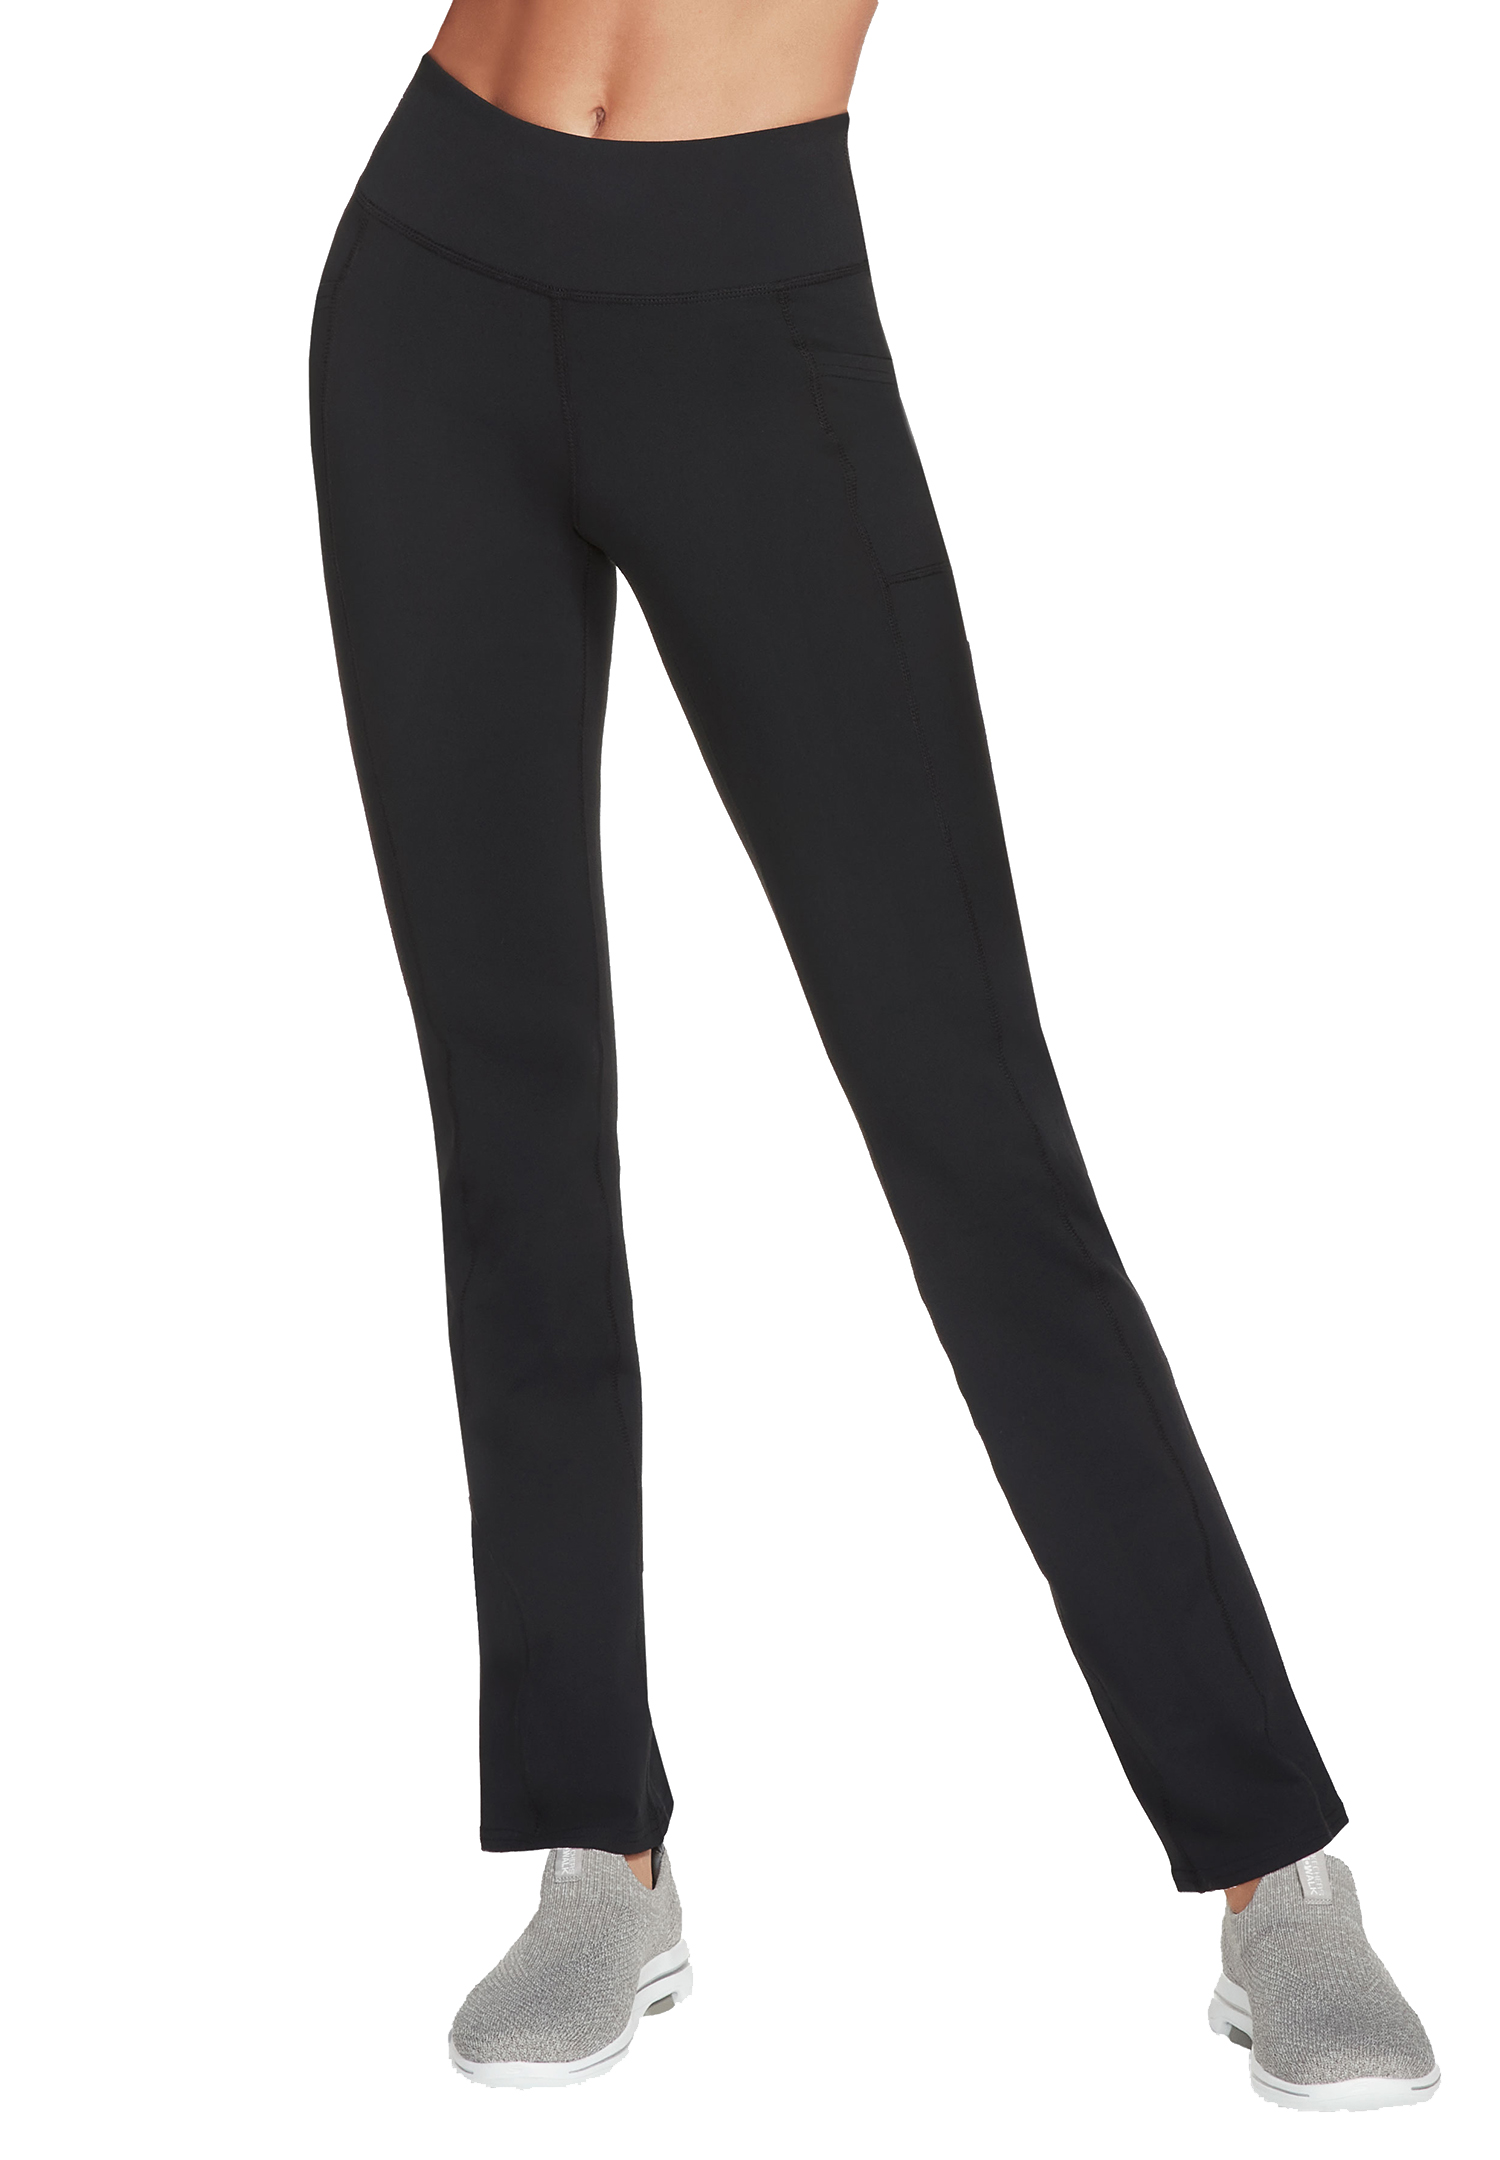 Skechers Apparel GO WALK OG Pant Regular Length Damen Sweatpants W03PT20B 017 BLK schwarz